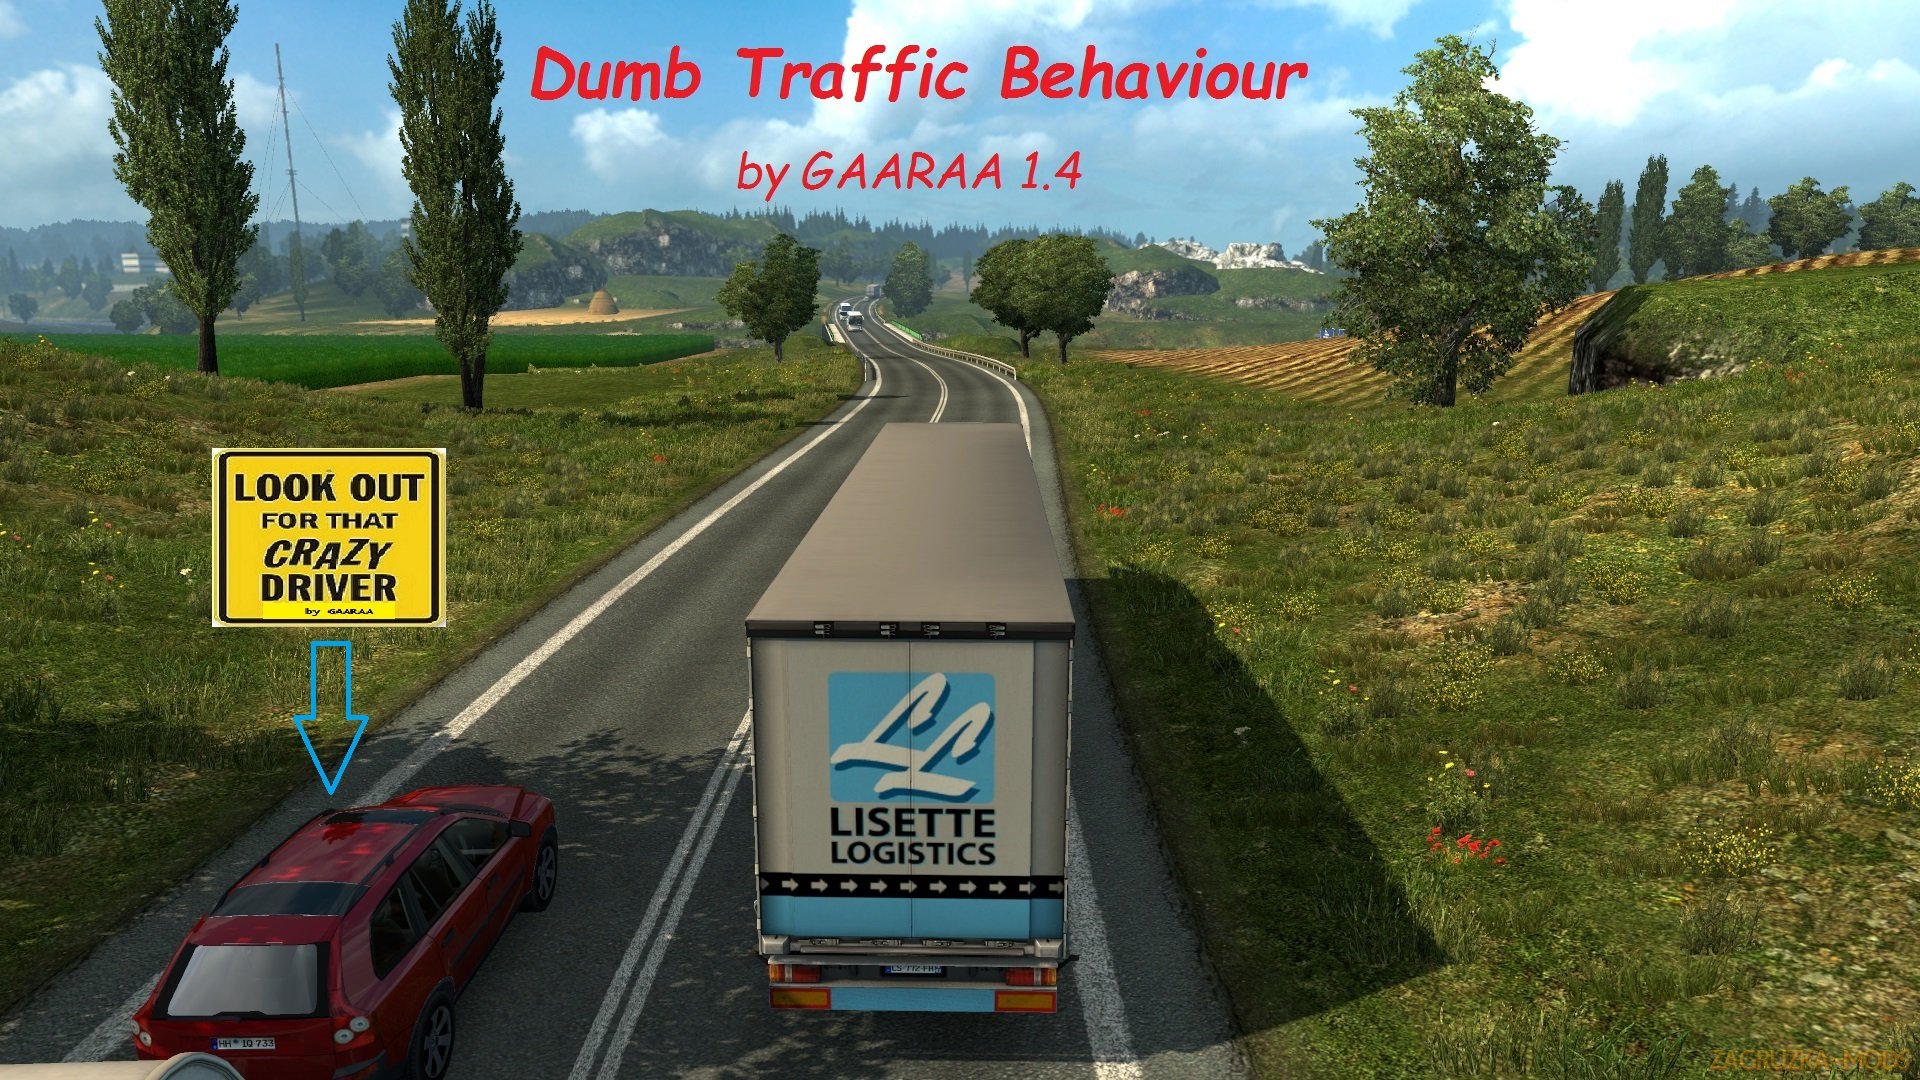 Dumb Traffic Behaviour by GAARAA 1.4